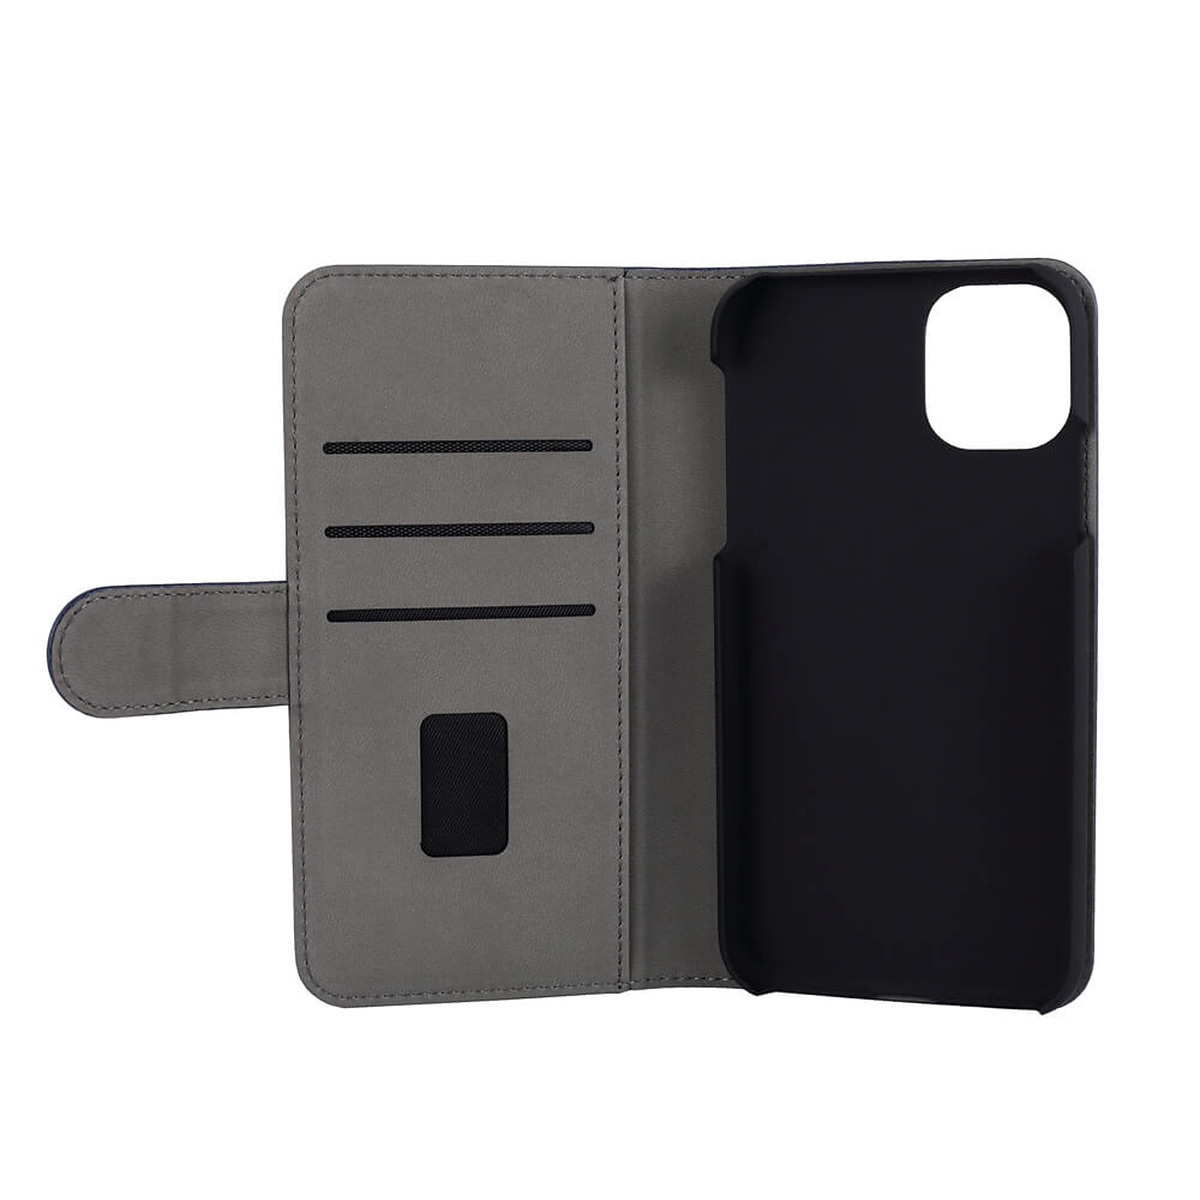 Gear plånboksväska, Limited Edition, iPhone 11, blå